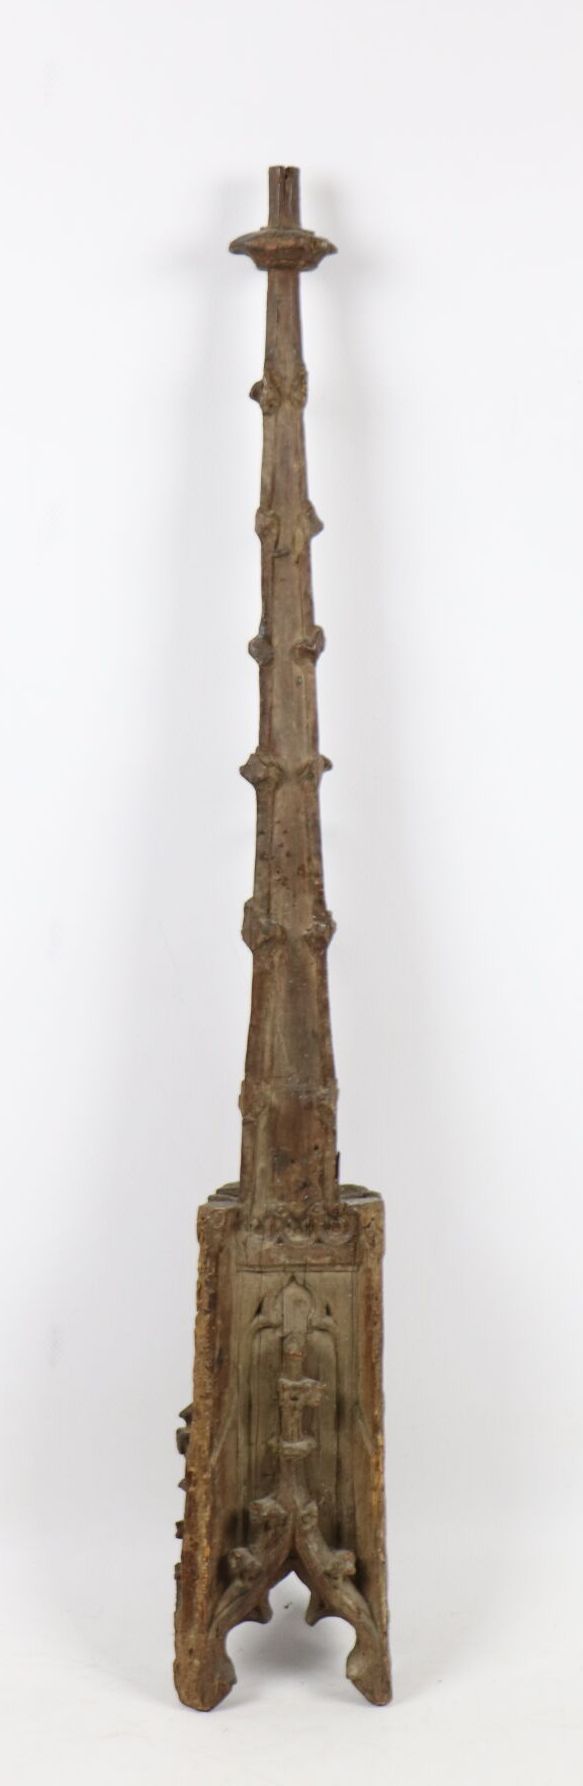 Null 雕刻的天然木制祭台，形成一个建筑尖顶。
18世纪。
高_76厘米